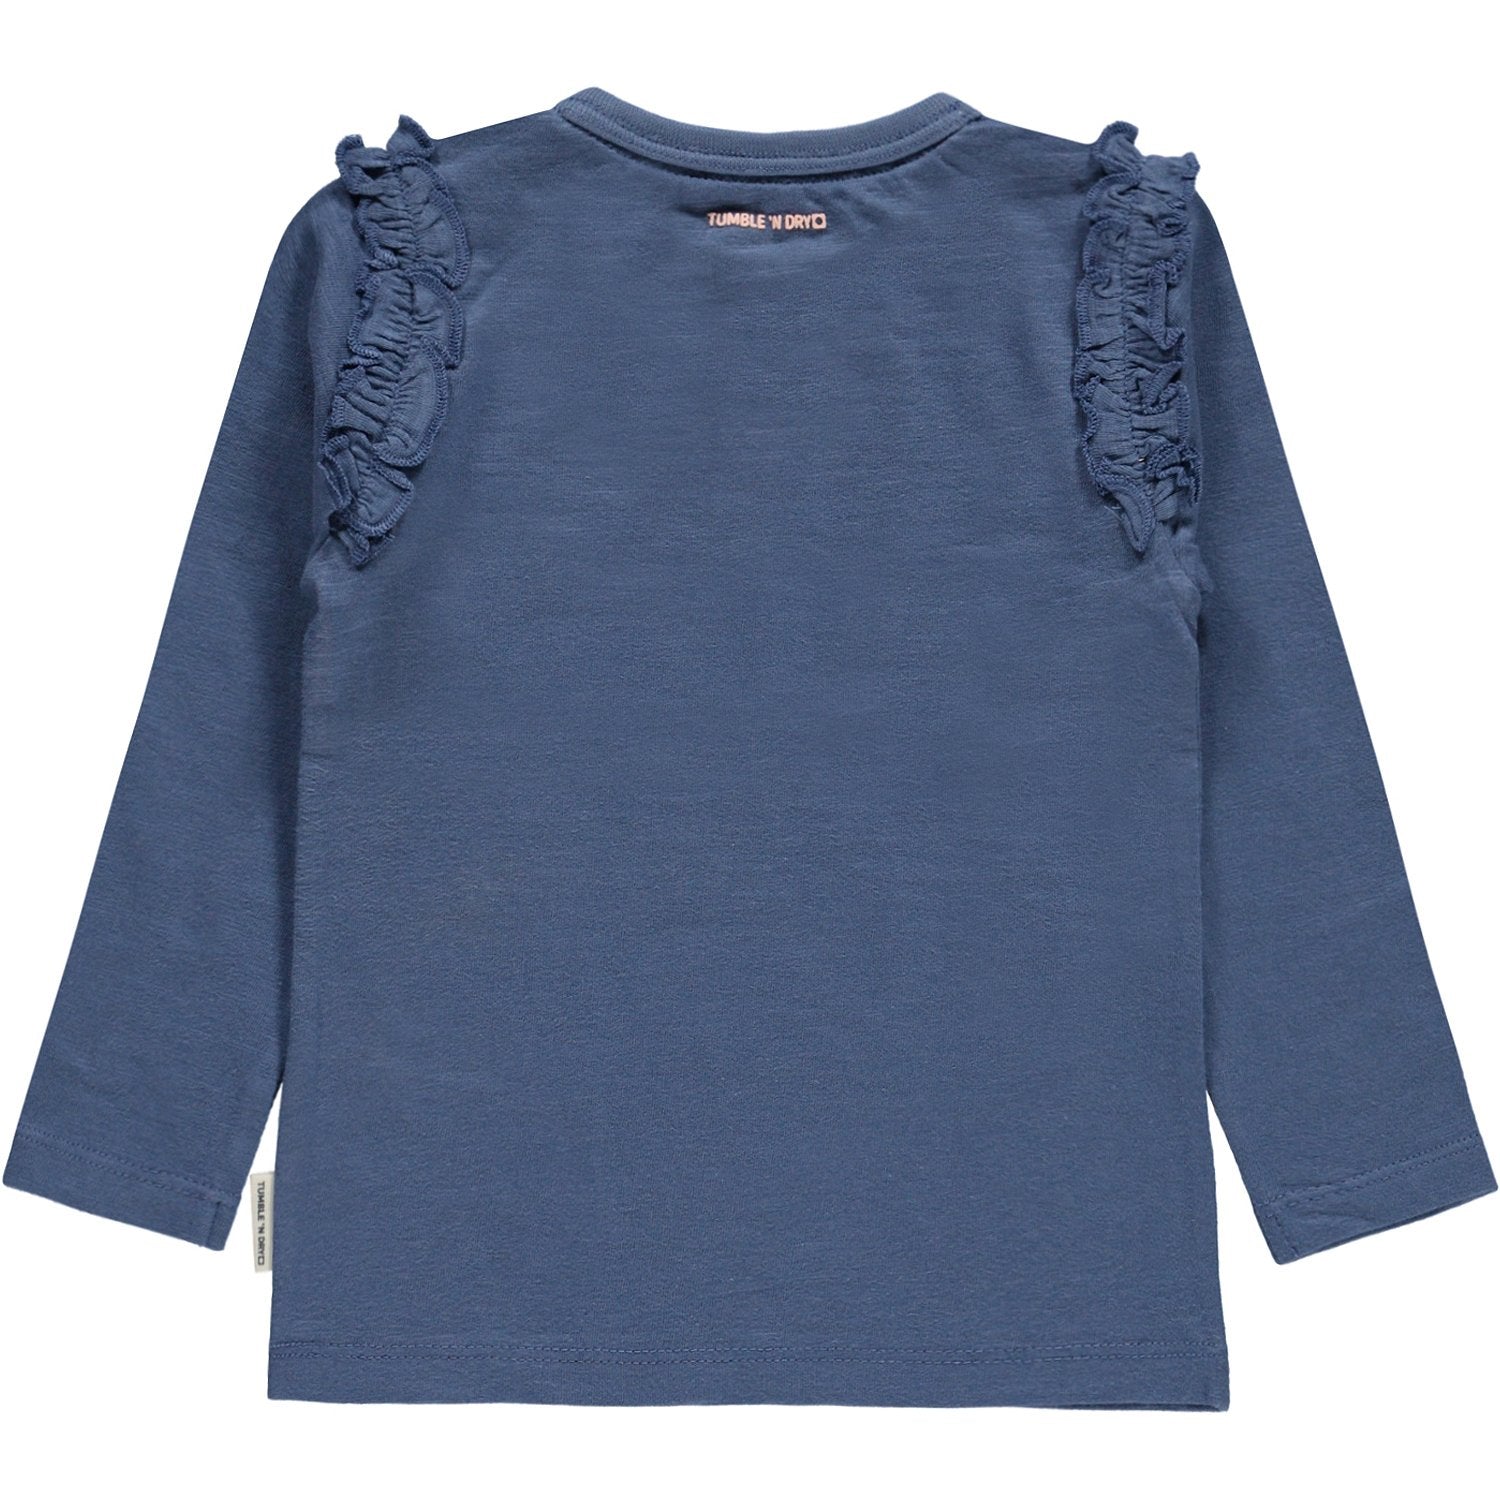 Baby Meisjes T-shirt Lm O-hals van Tumble 'n Dry in de kleur Bijou blue in maat 86.